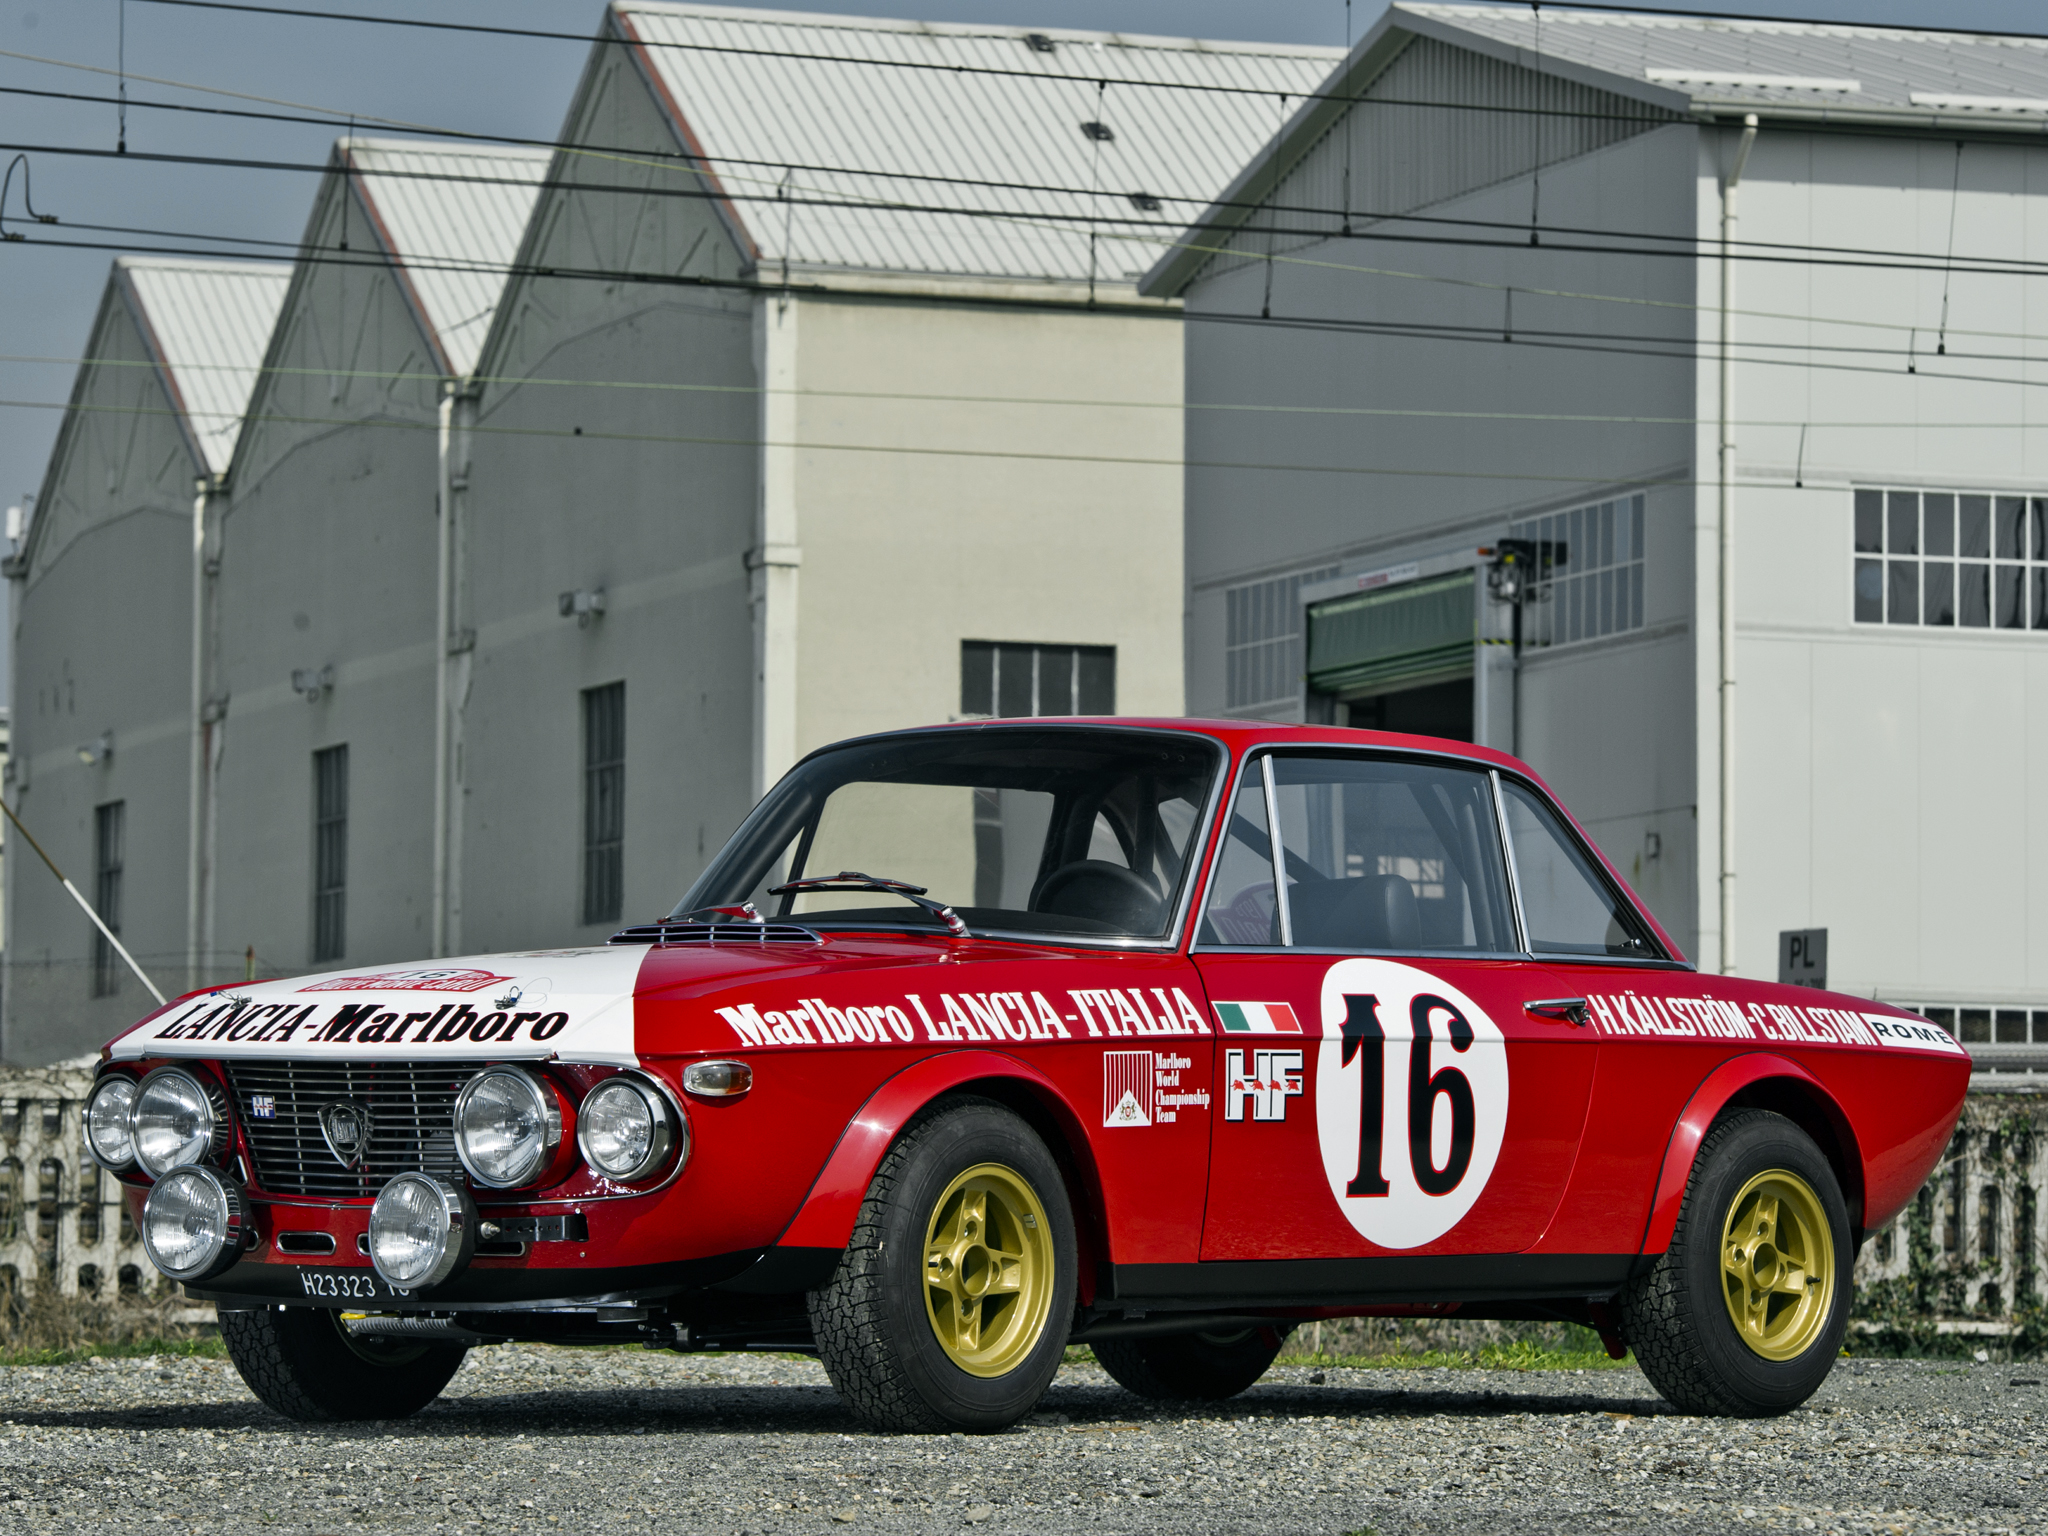 1970, Lancia, Fulvia, Coupe, 1600, H f, Corsa, 818, Race, Racing Wallpaper